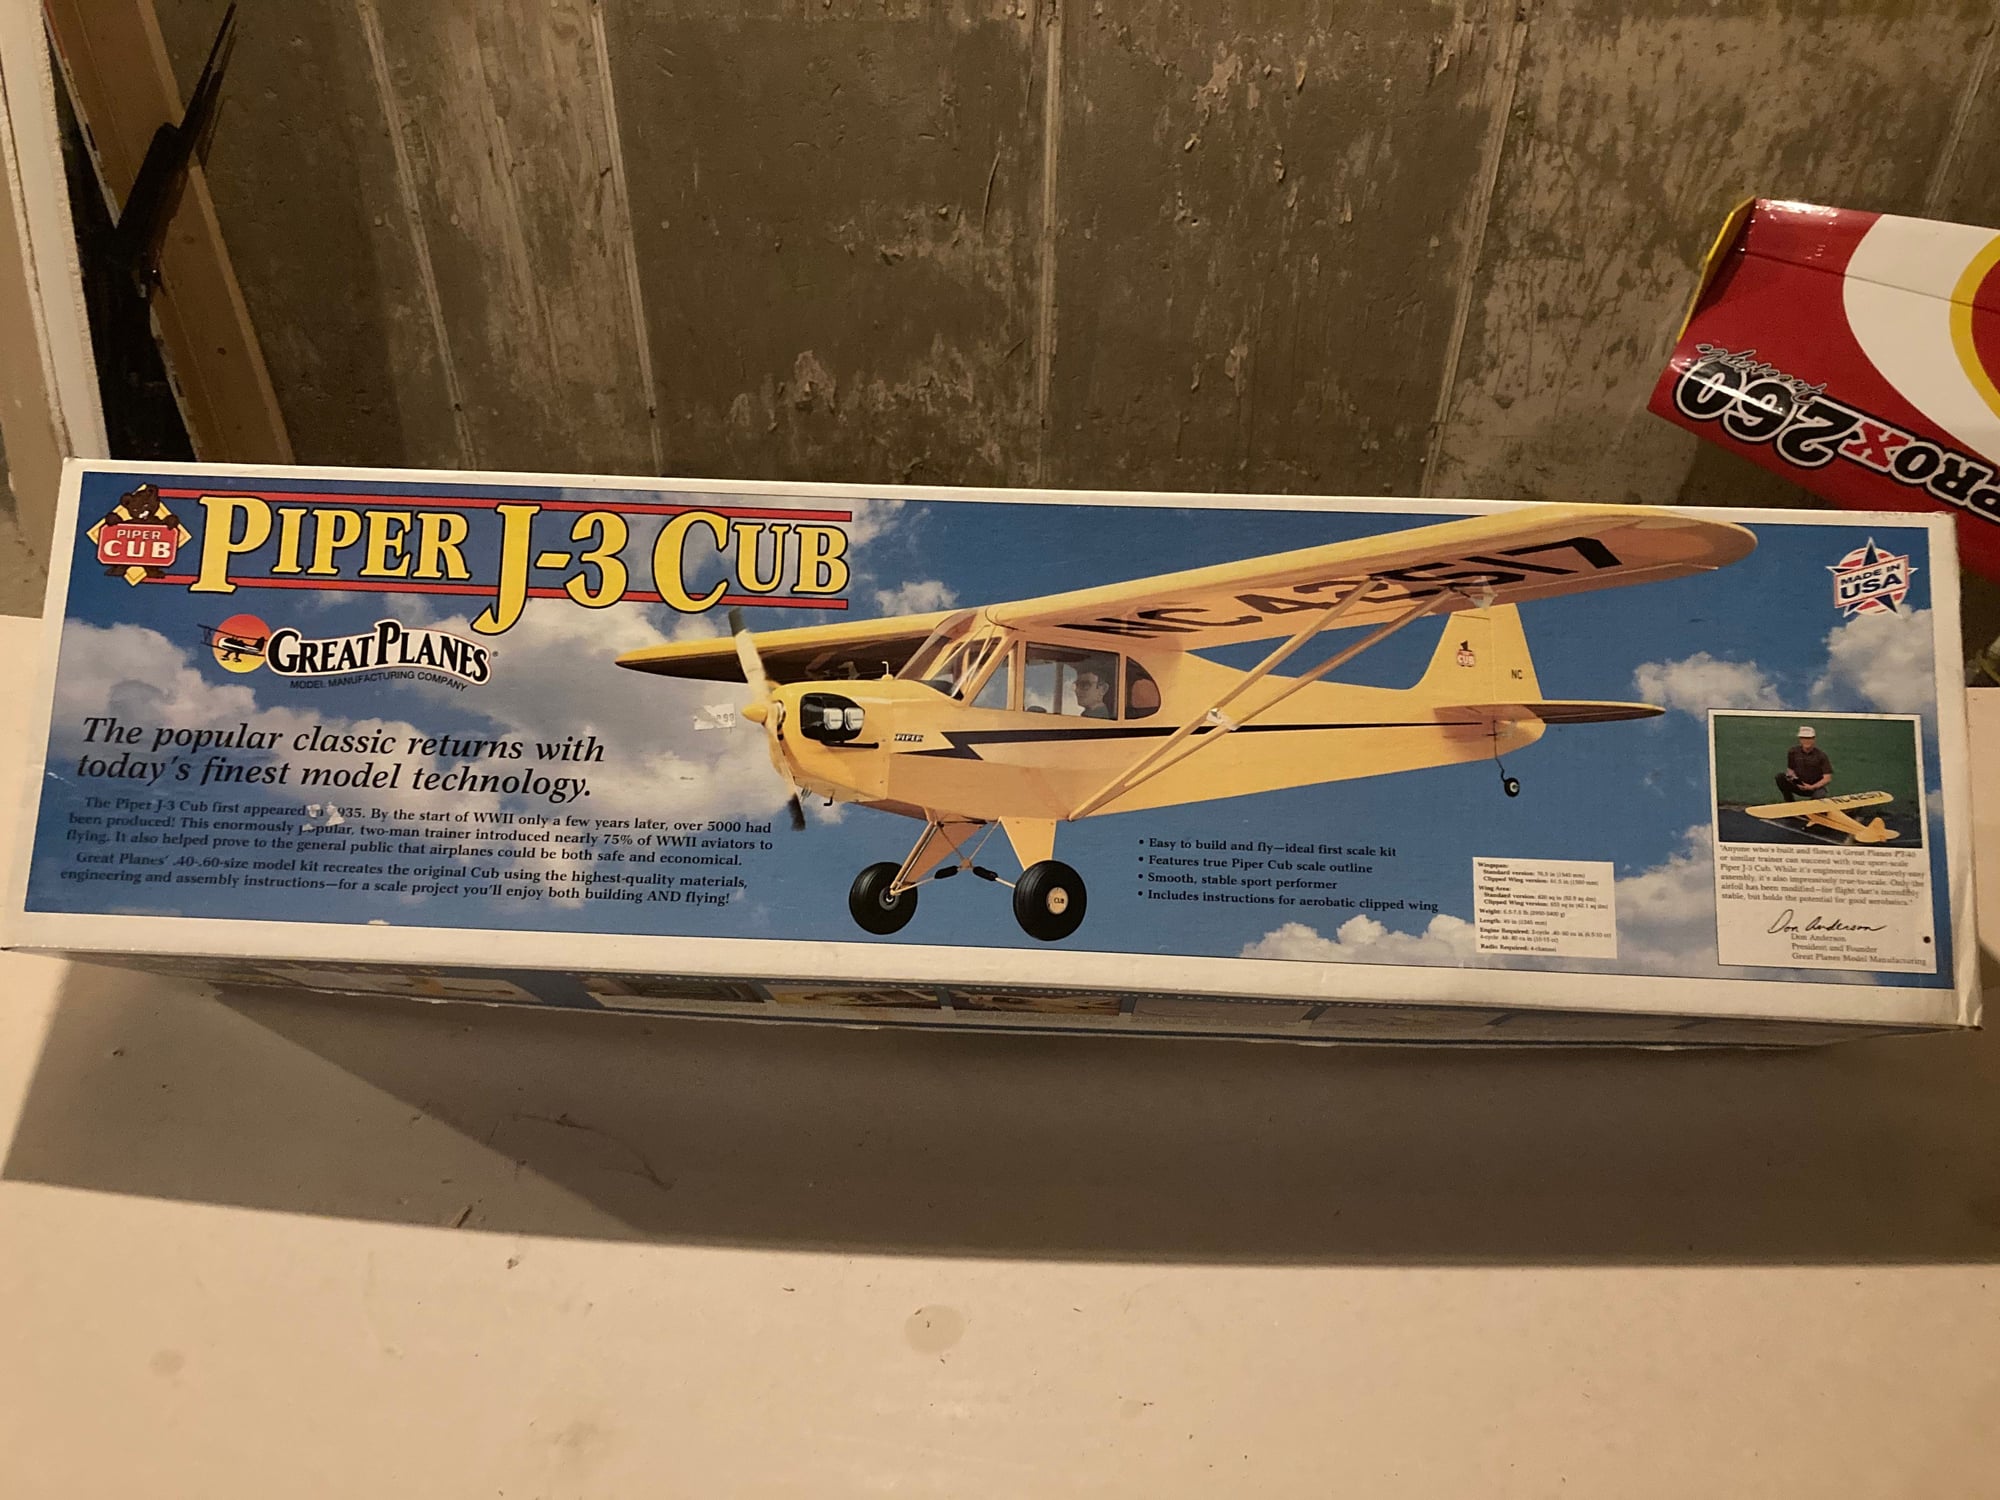 Great planes cub - RCU Forums